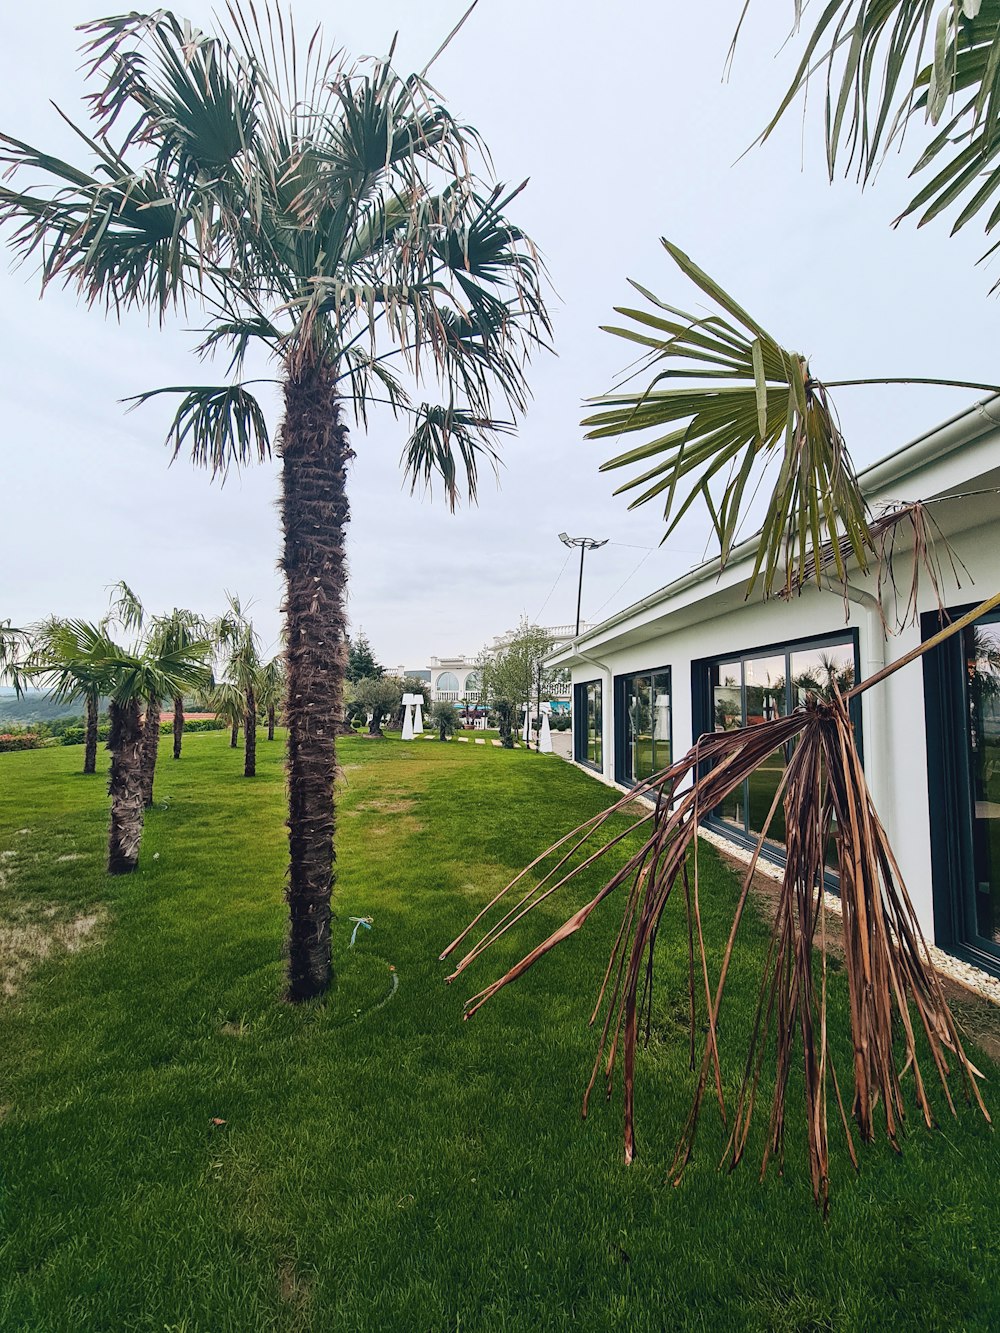 a palm tree in a yard